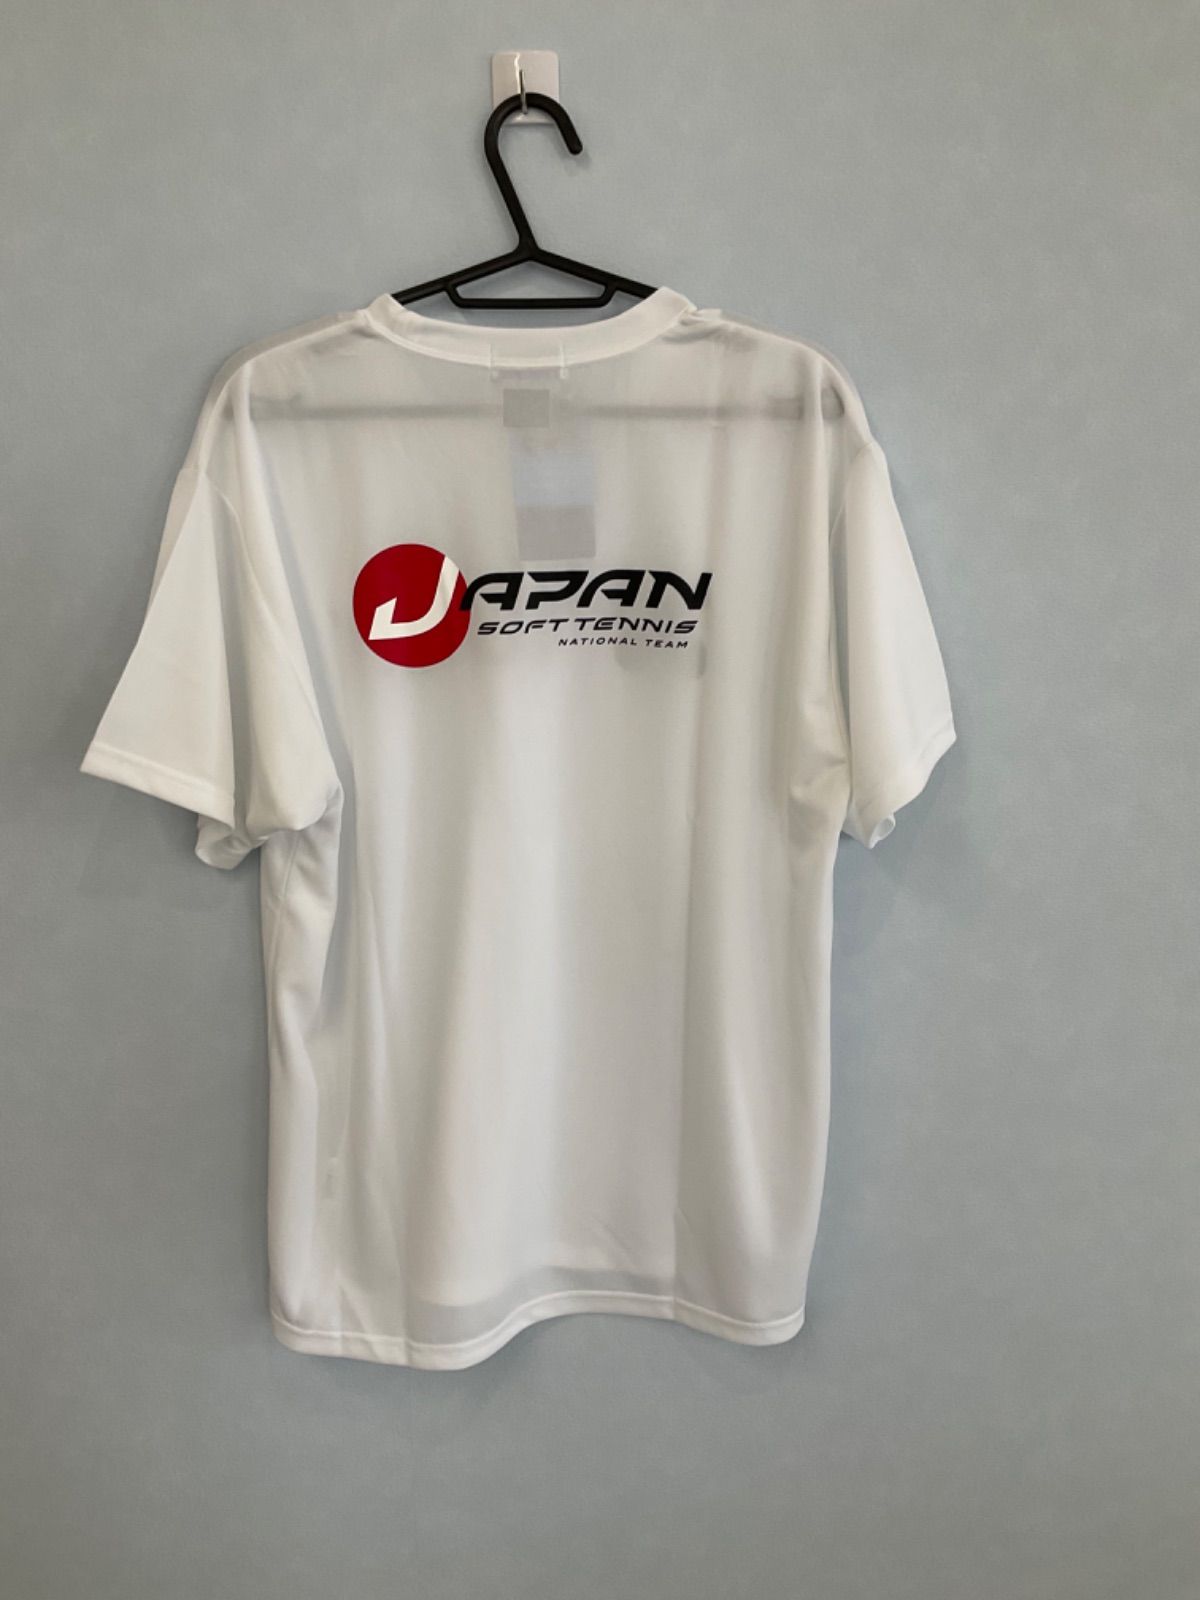 YONEX Tシャツ 日本ナショナルチームロゴ入り 限定 カタログ未掲載 